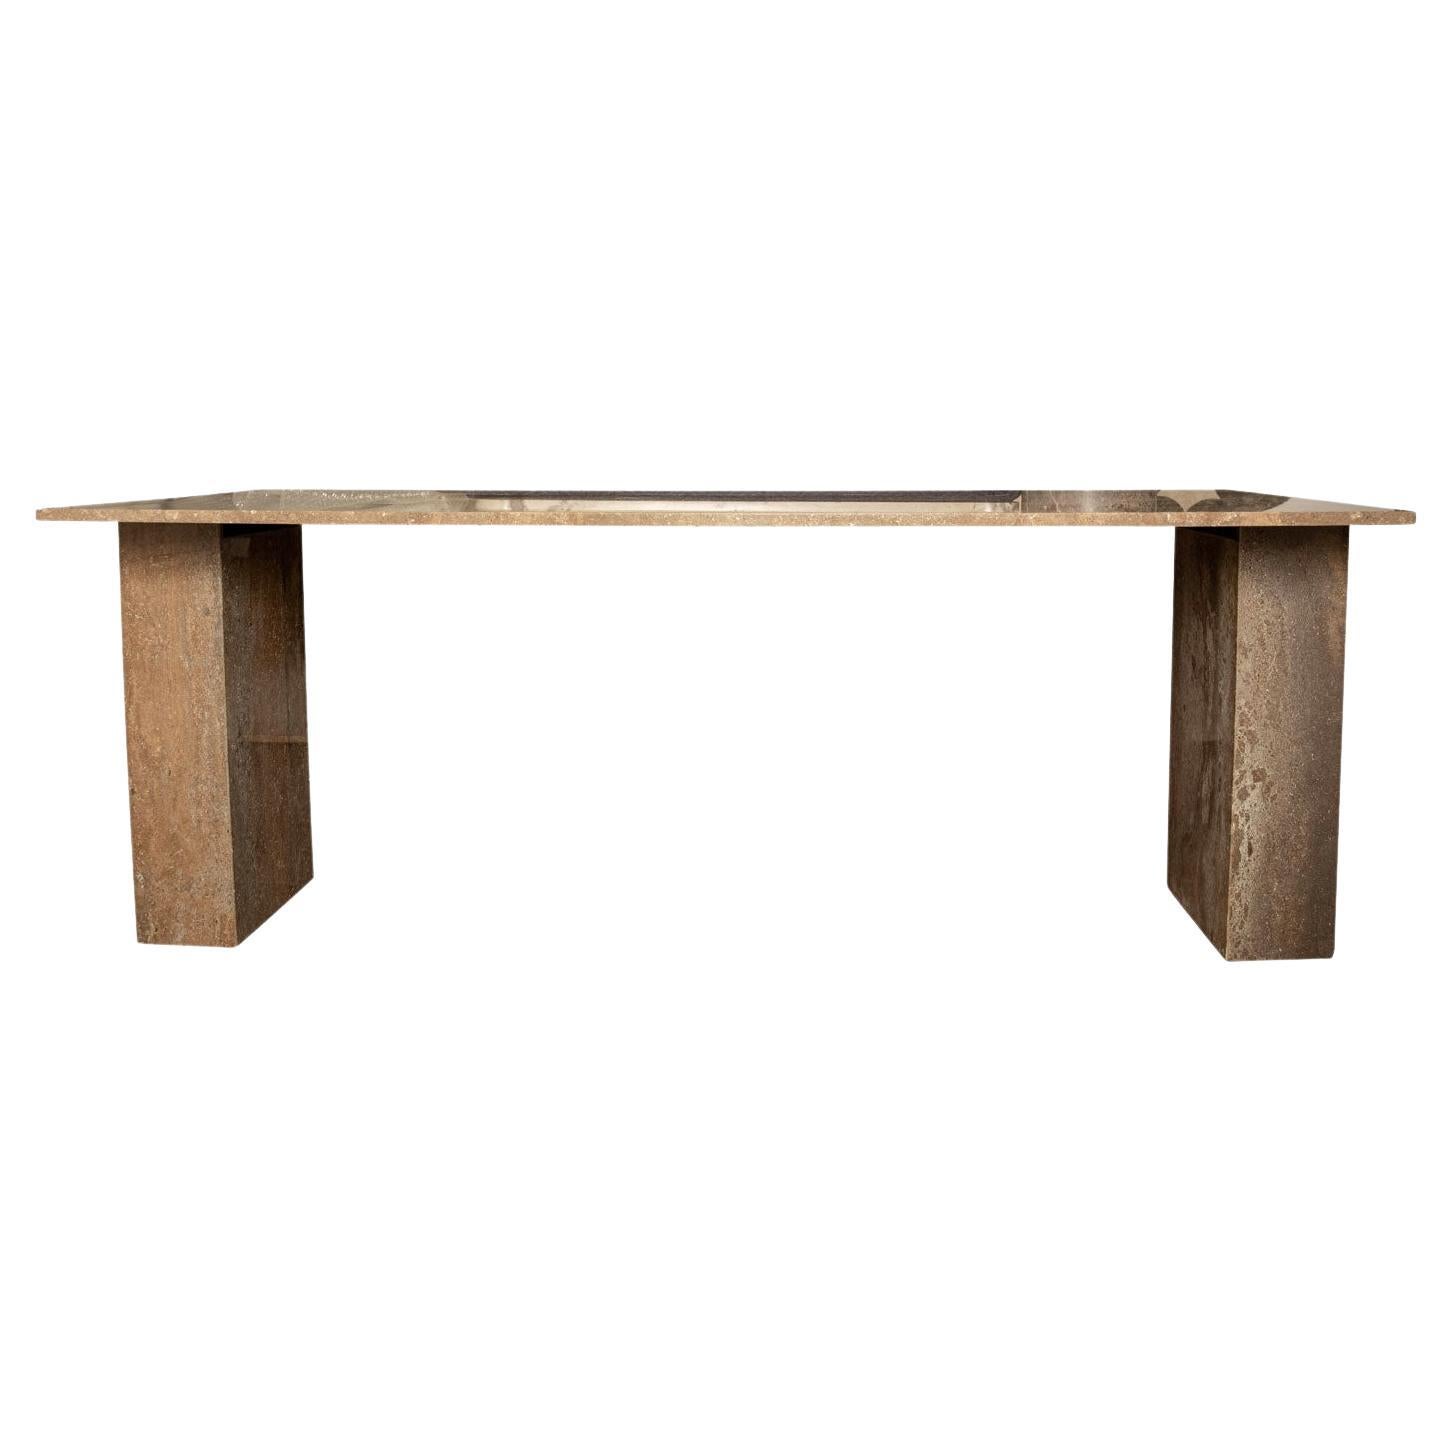 Italian Modern Travertine Center Table or Desk Designed by Angelo Mangiarotti